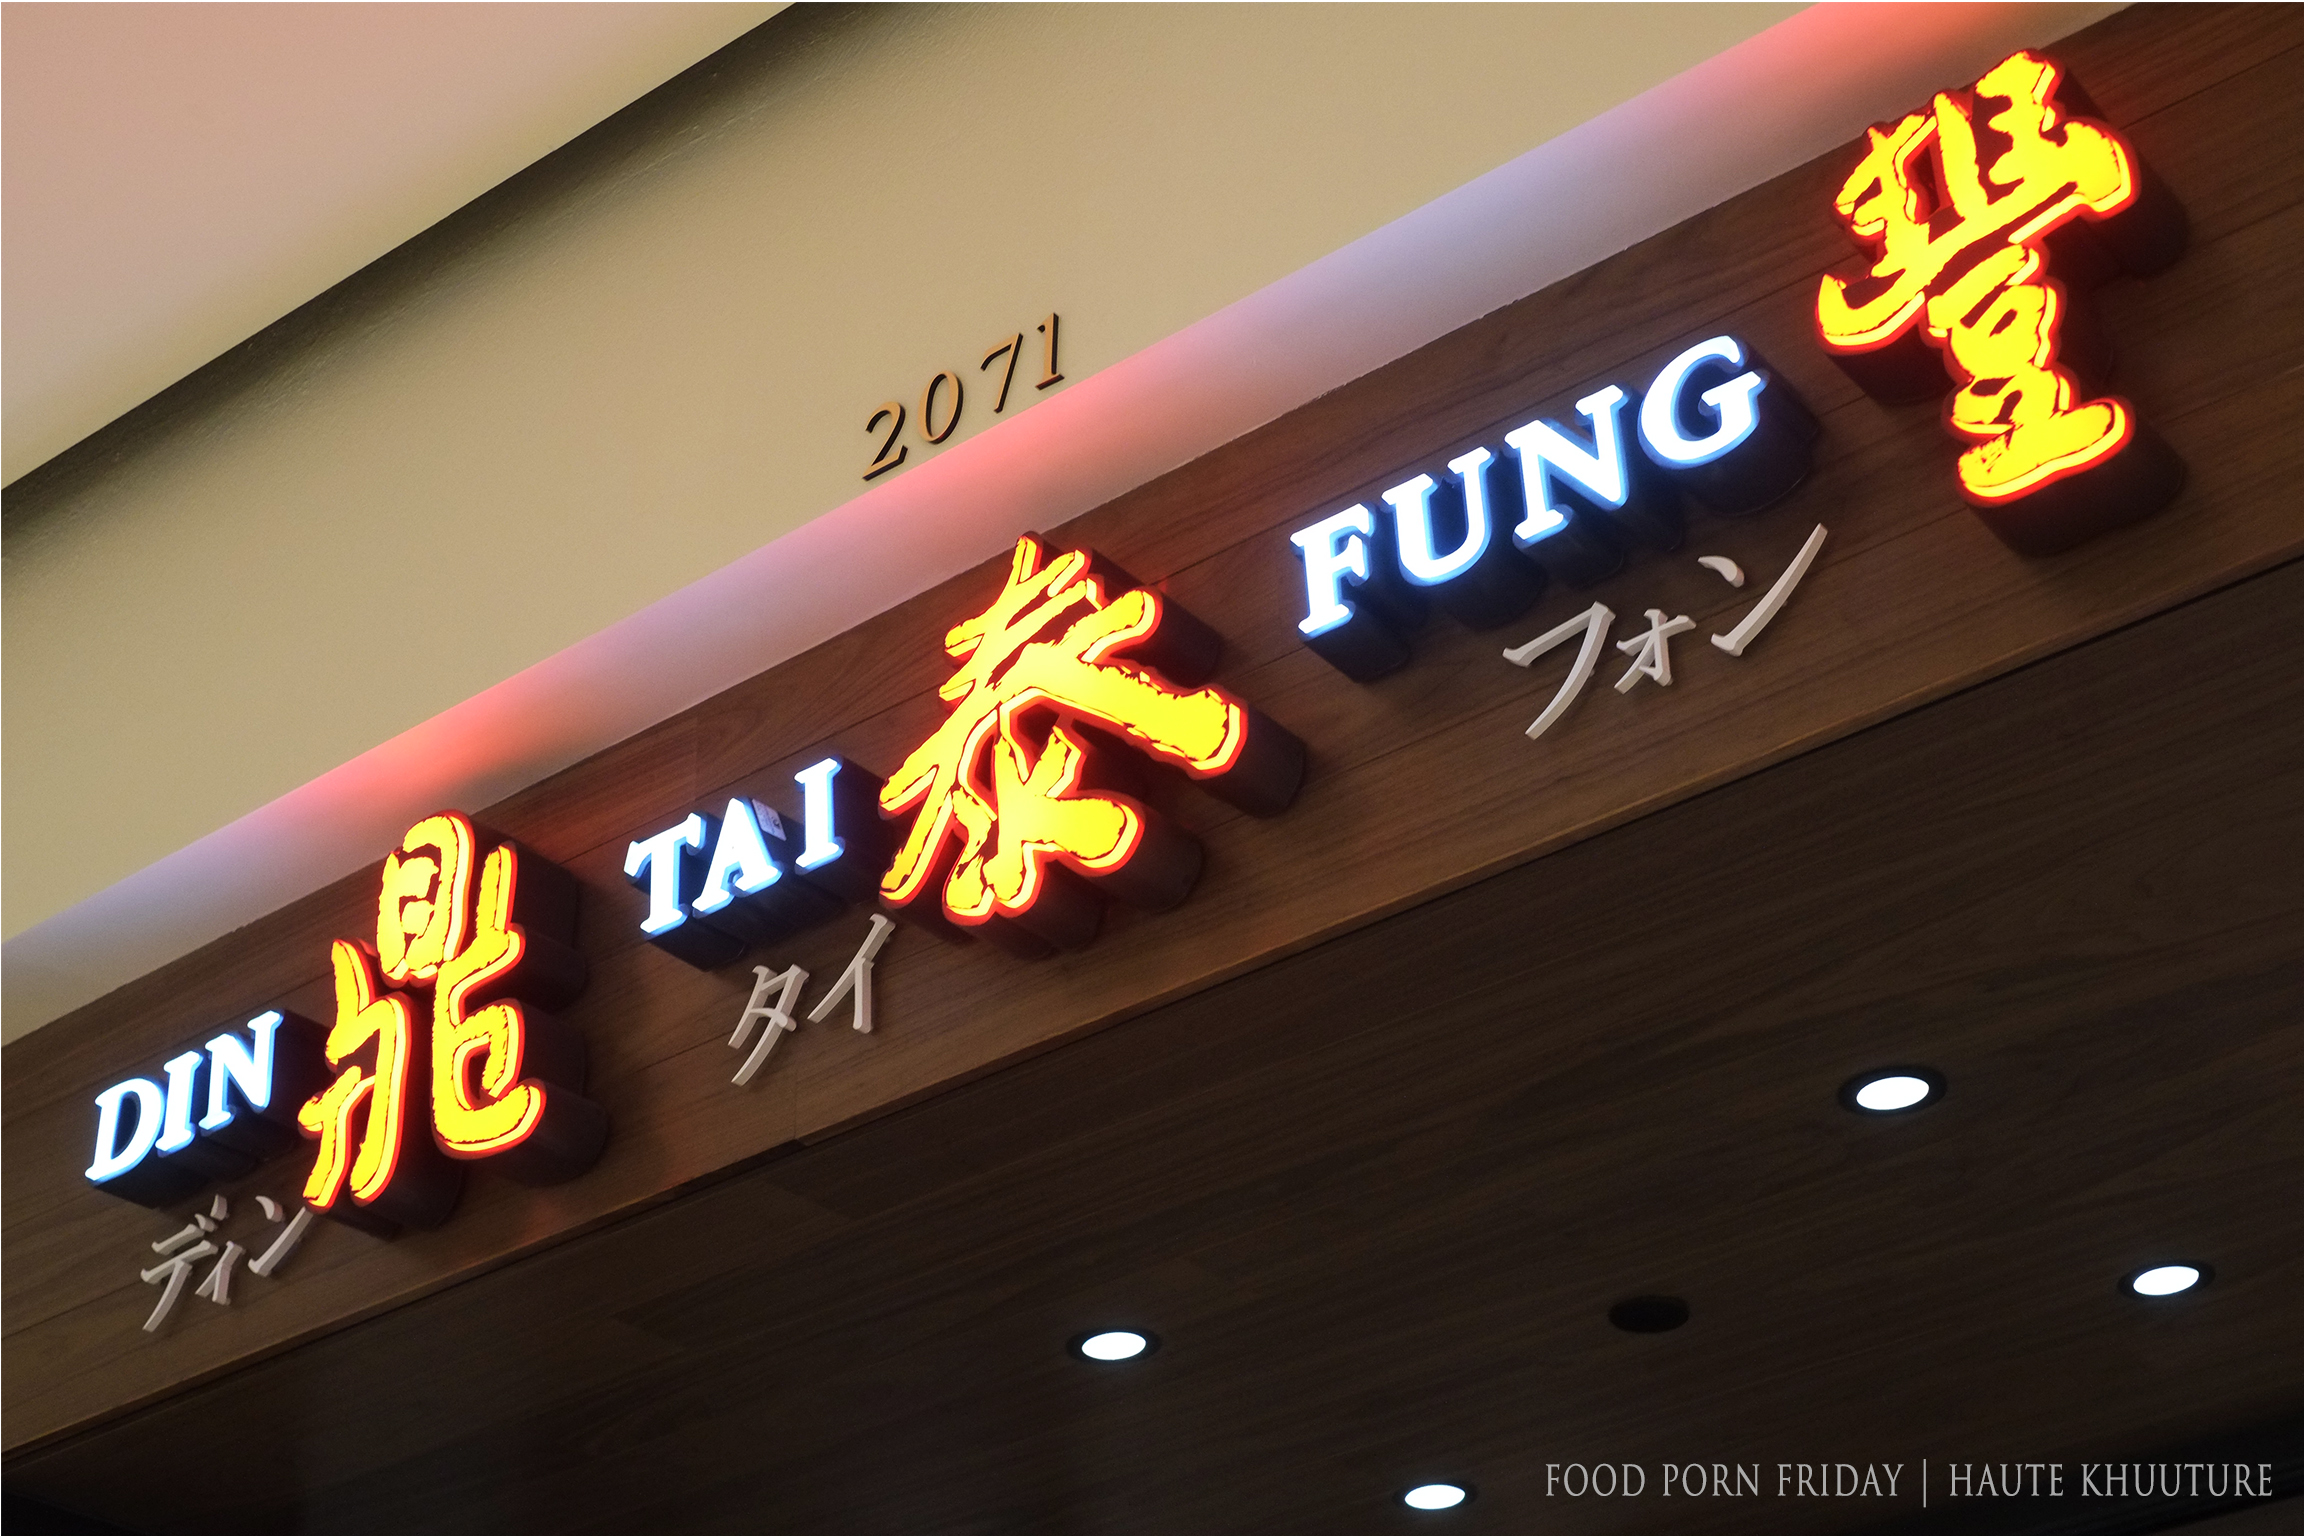 Costa Mesa Restaurant - Din Tai Fung